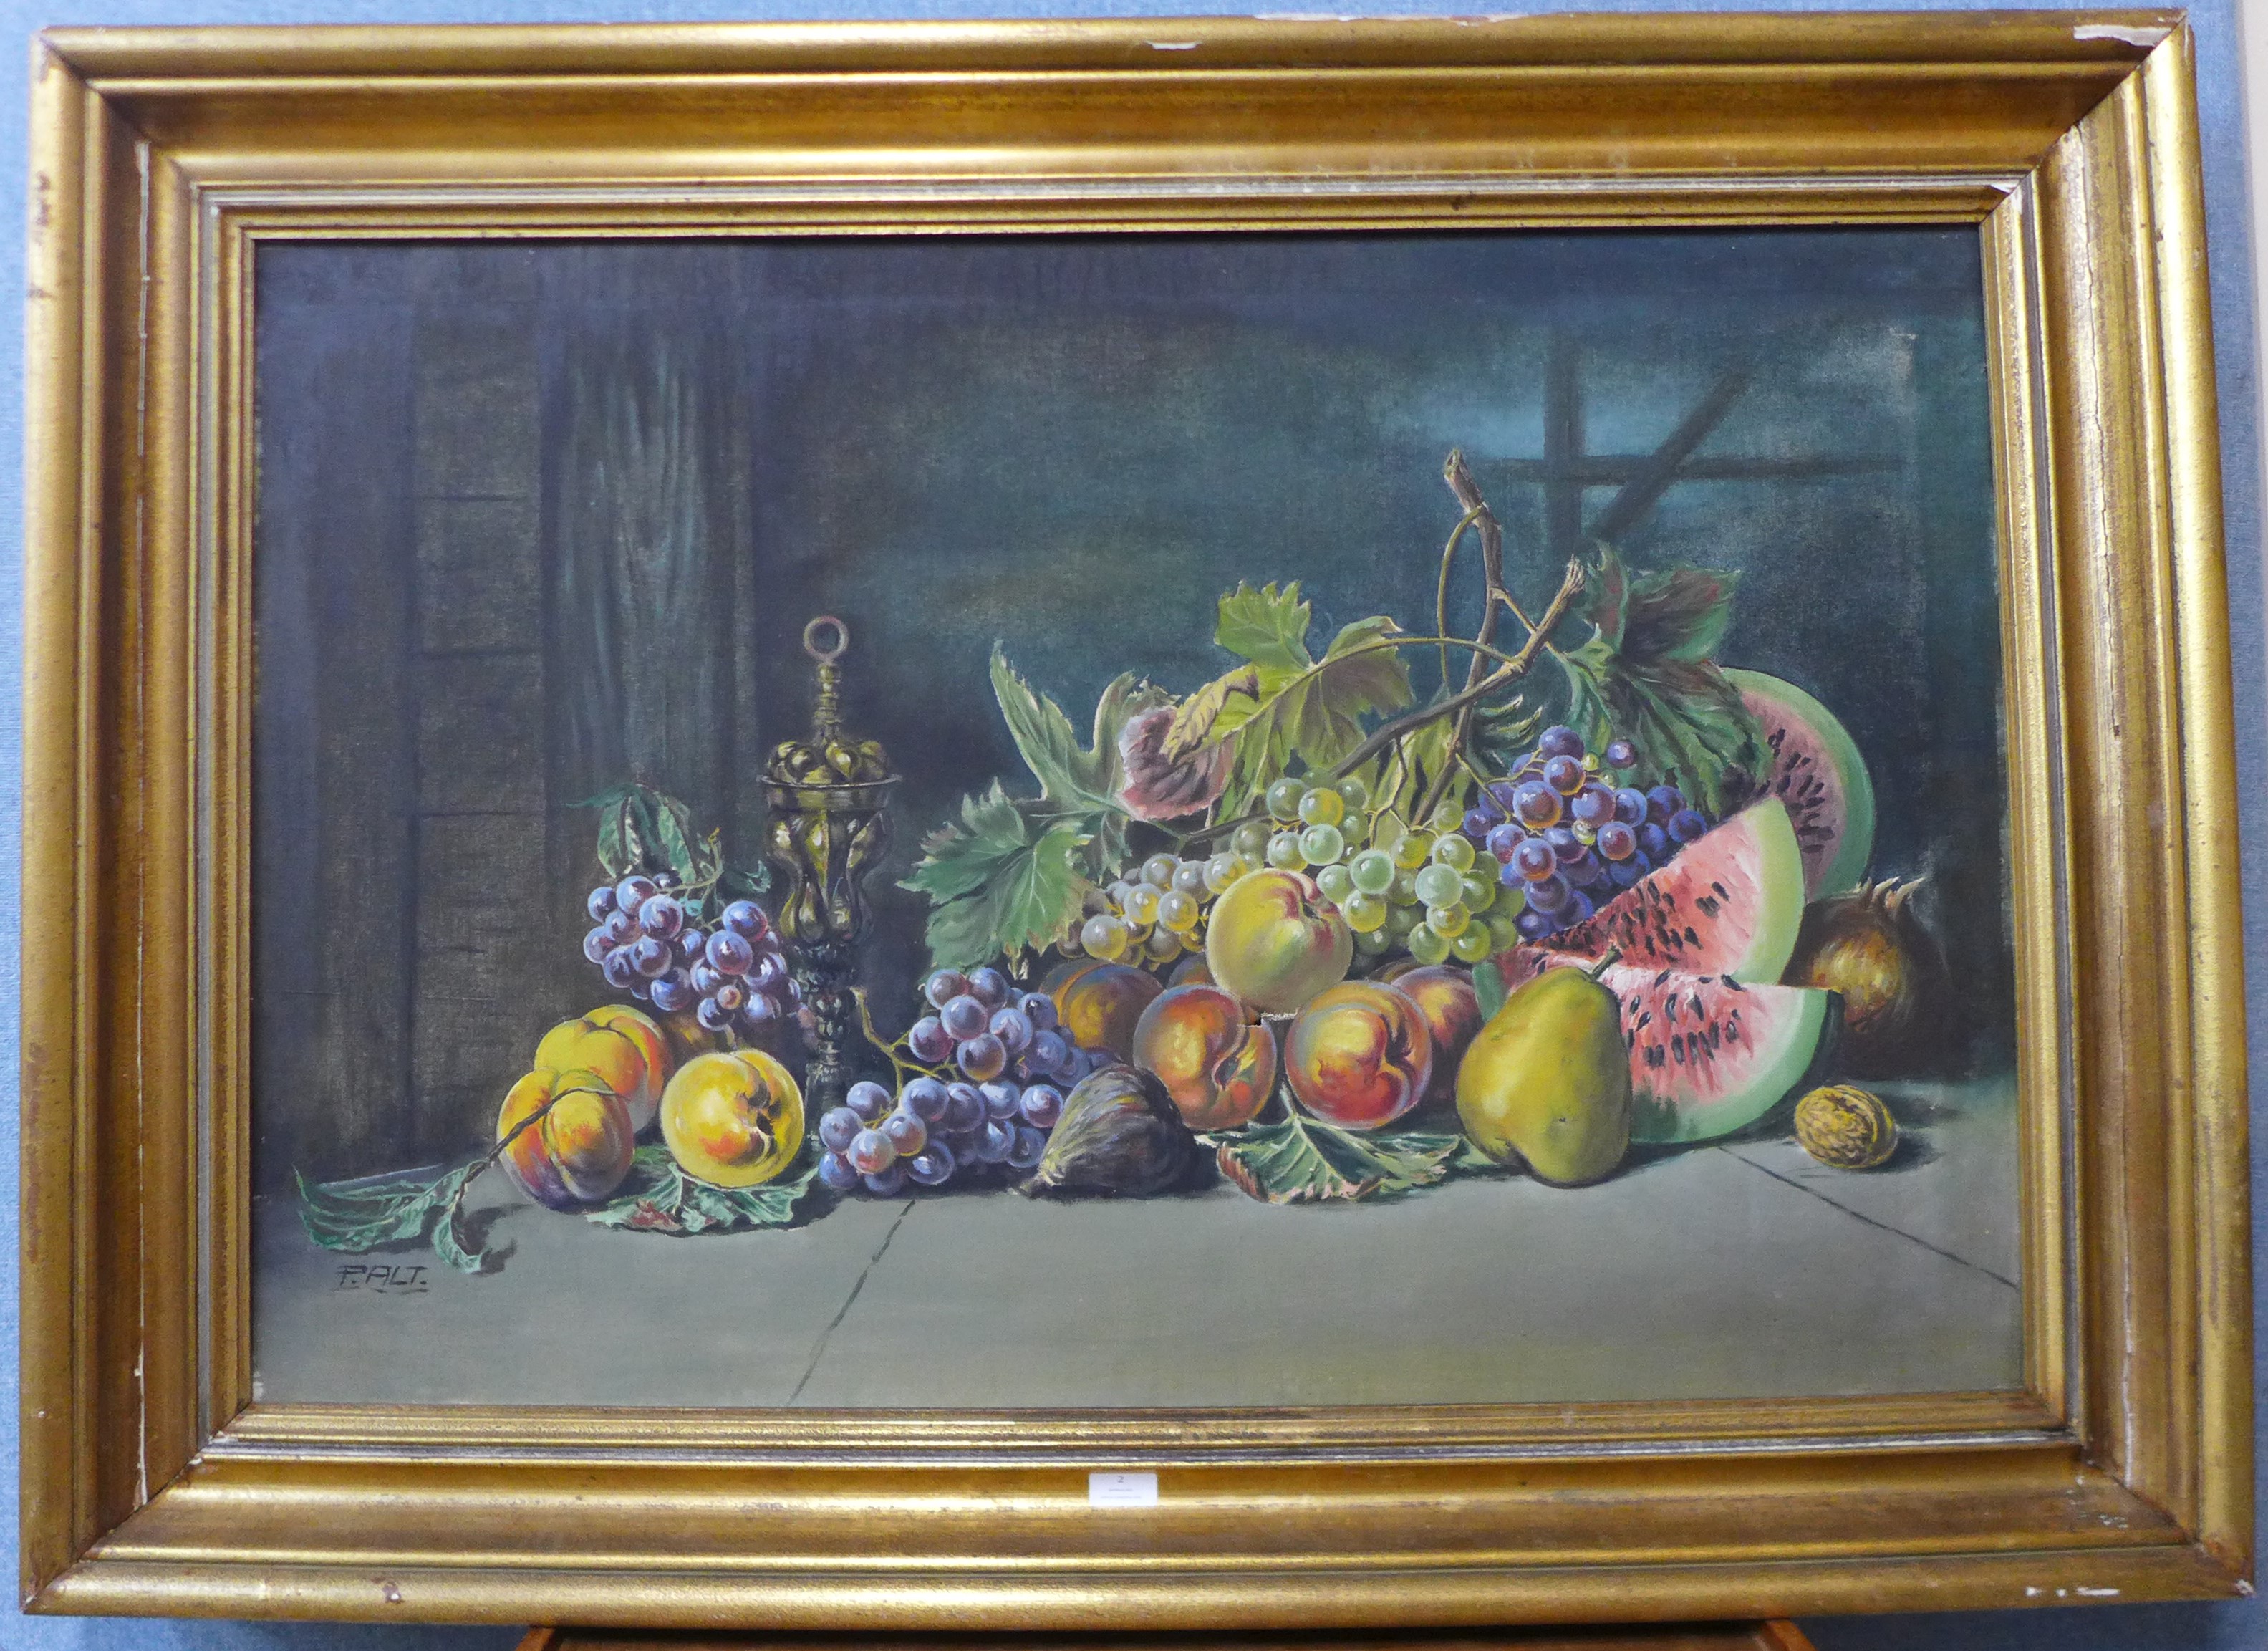 P. Alt., still life of fruit, oil on canvas, 68 x 103cms, framed - Image 2 of 3